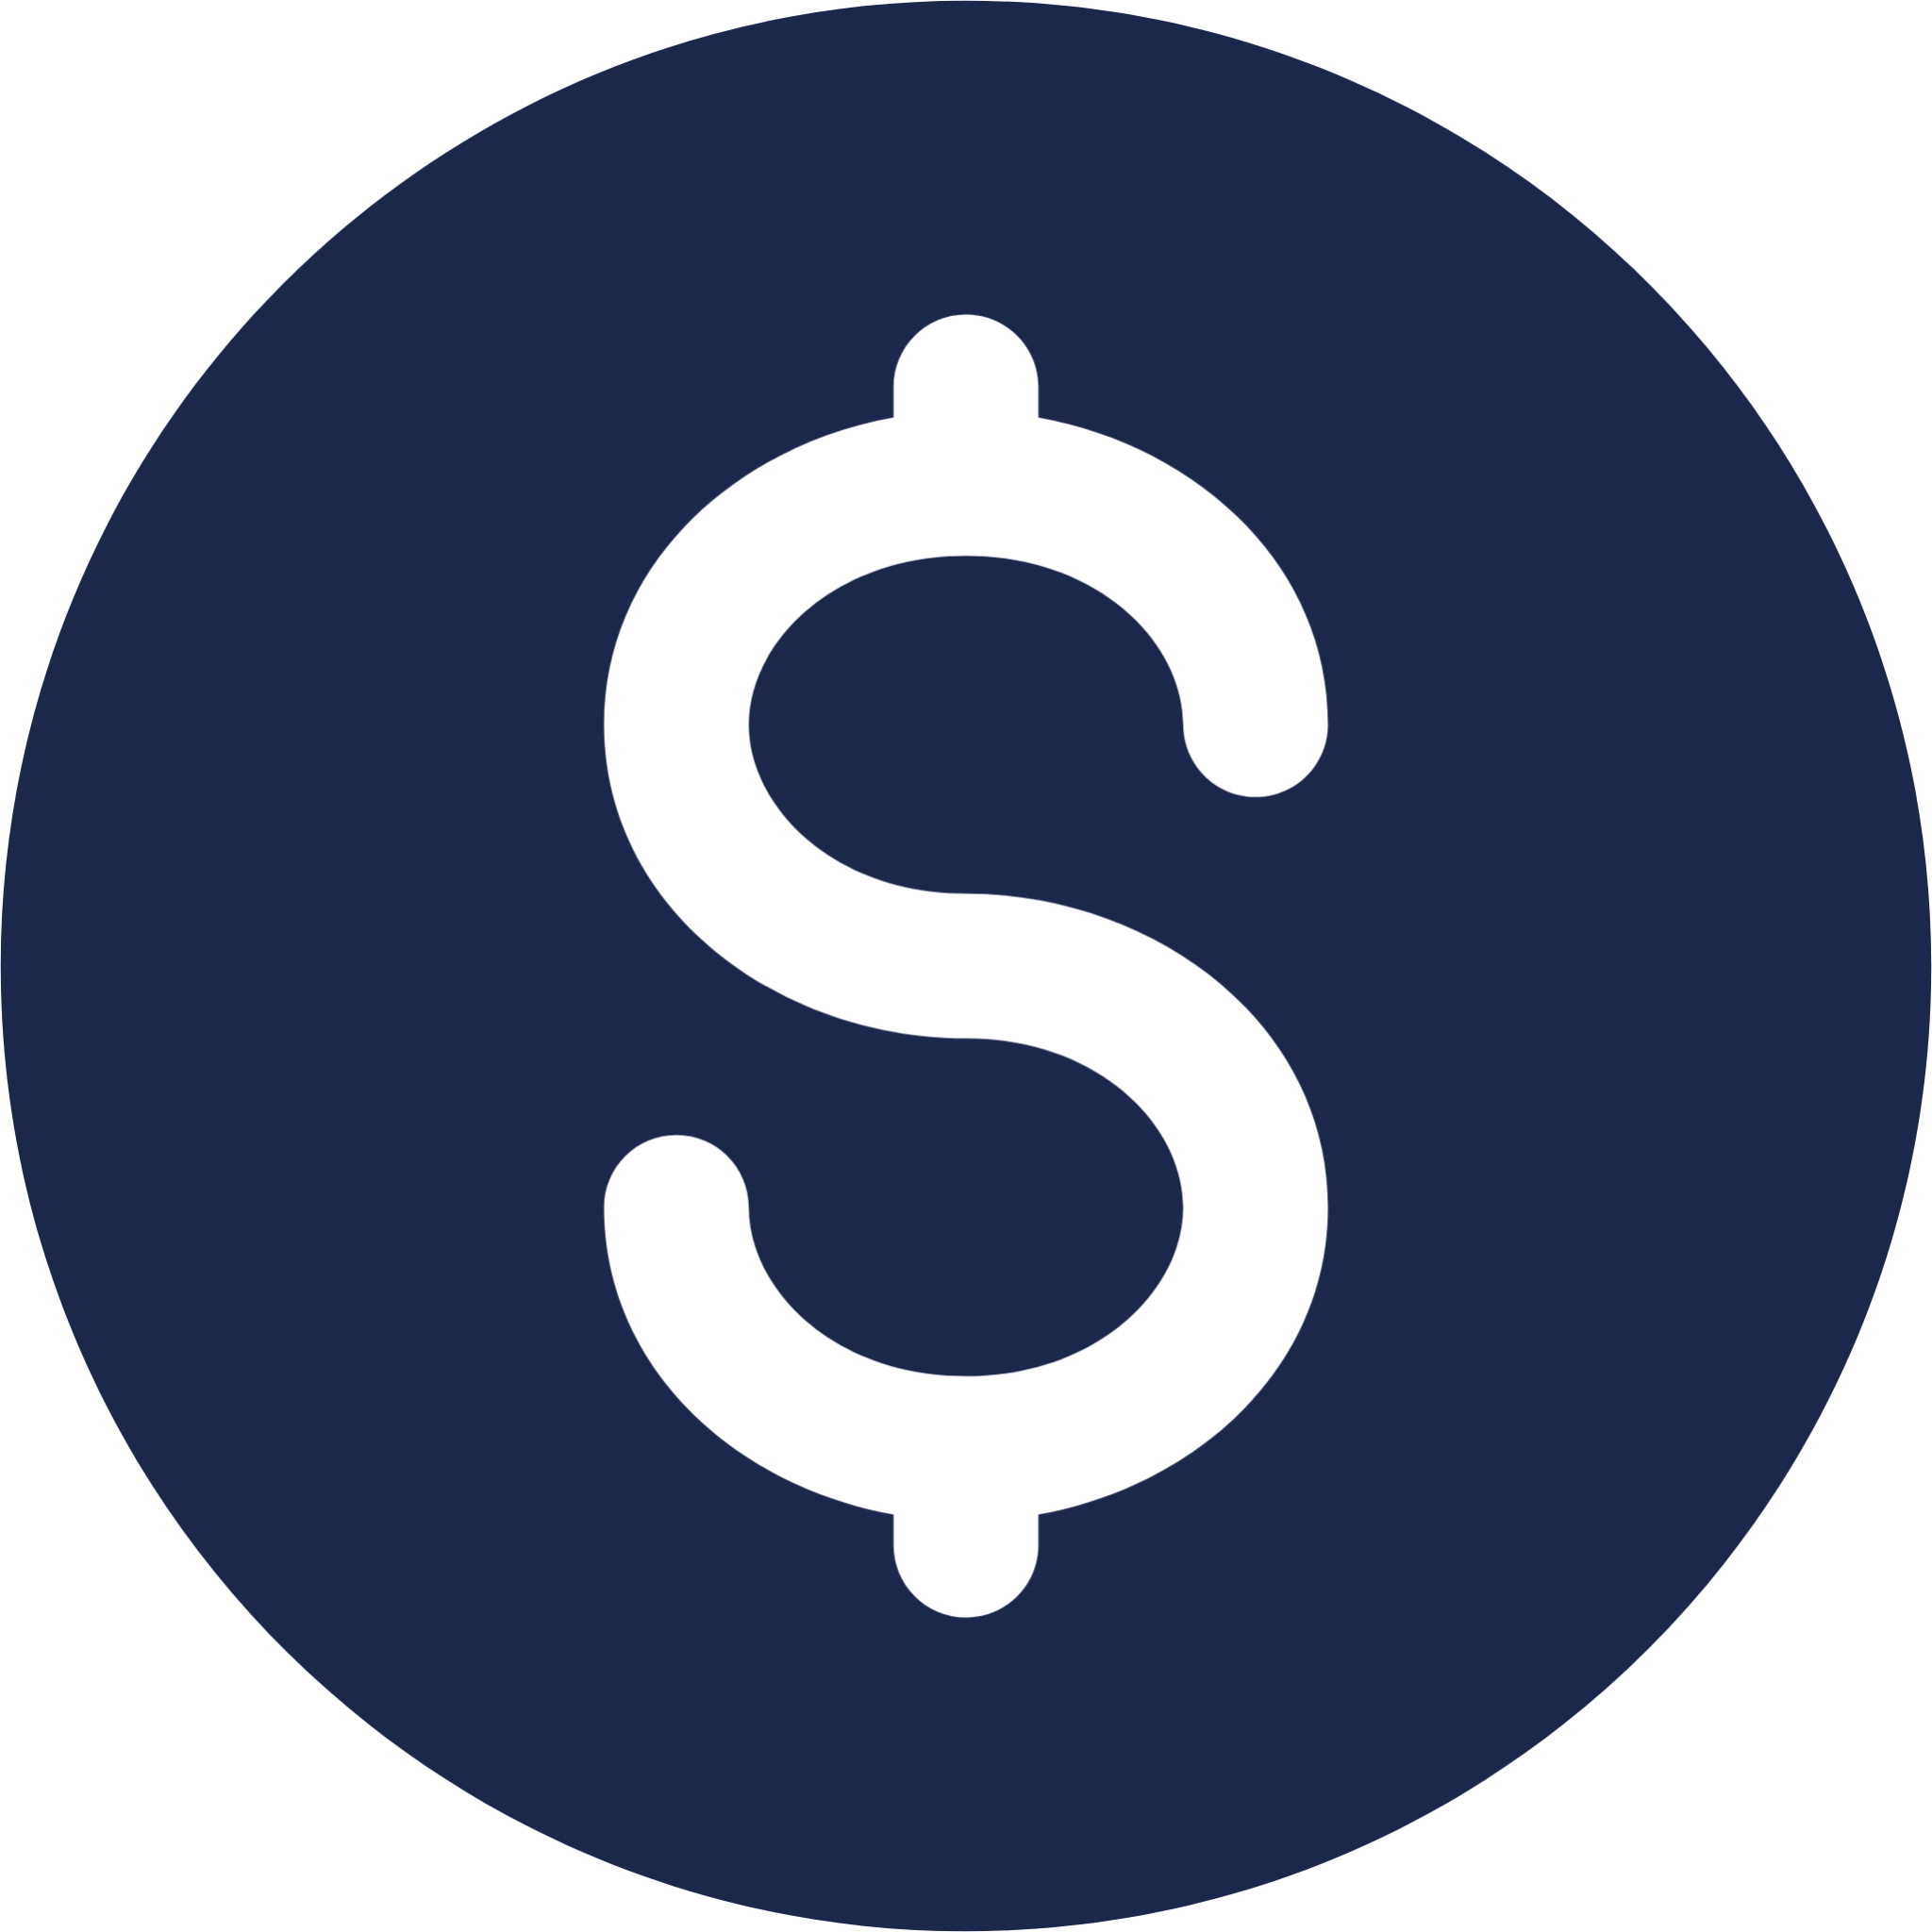 Dollar Minimalistic icon